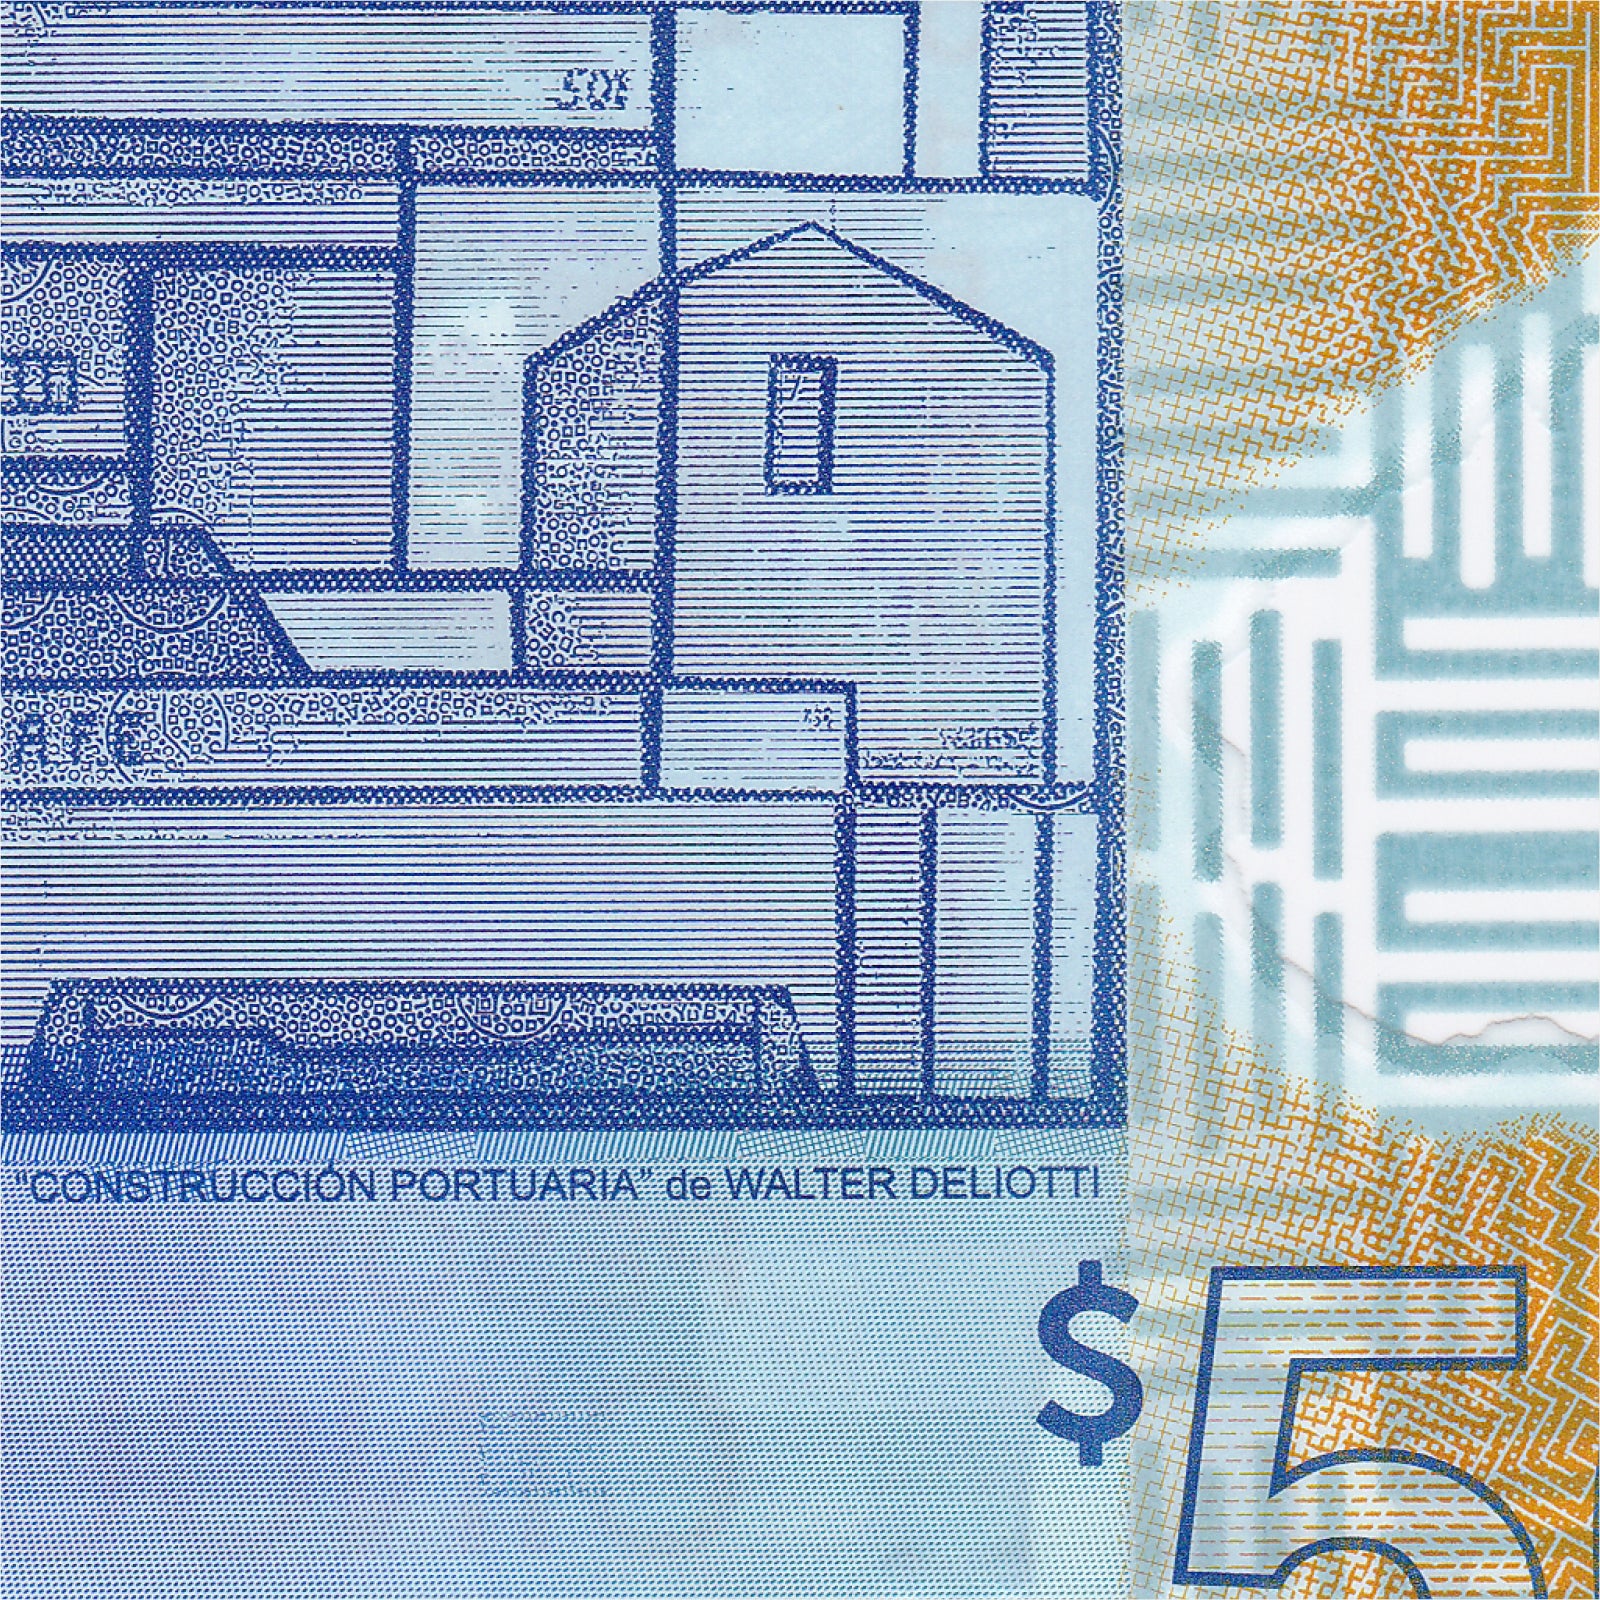 Uruguay 50 Pesos, 2017, B559a, P100, UNC - Robert's World Money - World Banknotes